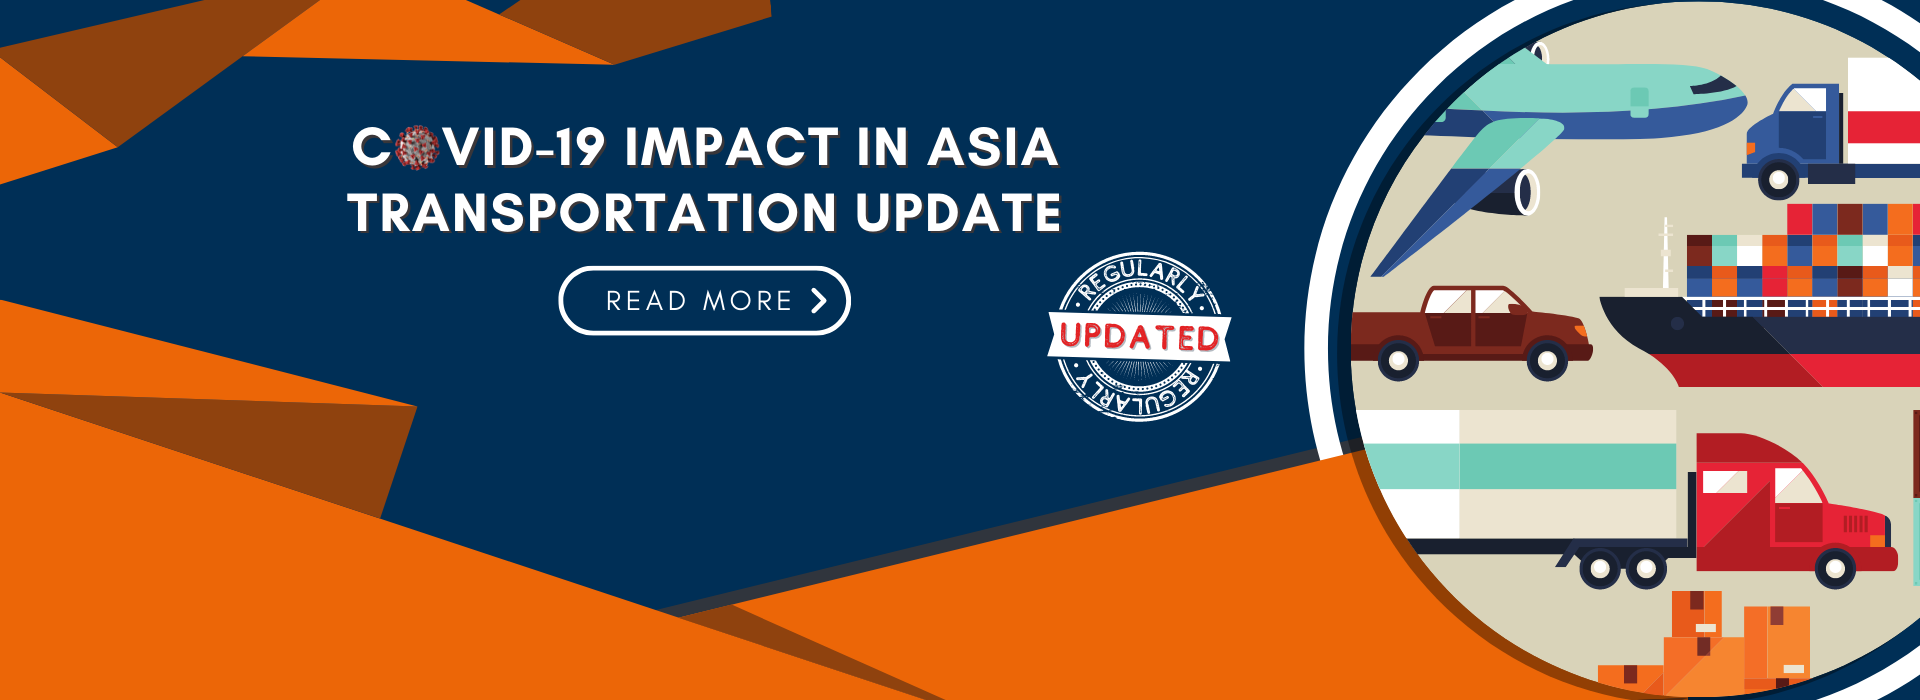 COVID-19 Impact in Asia - Transportation Update